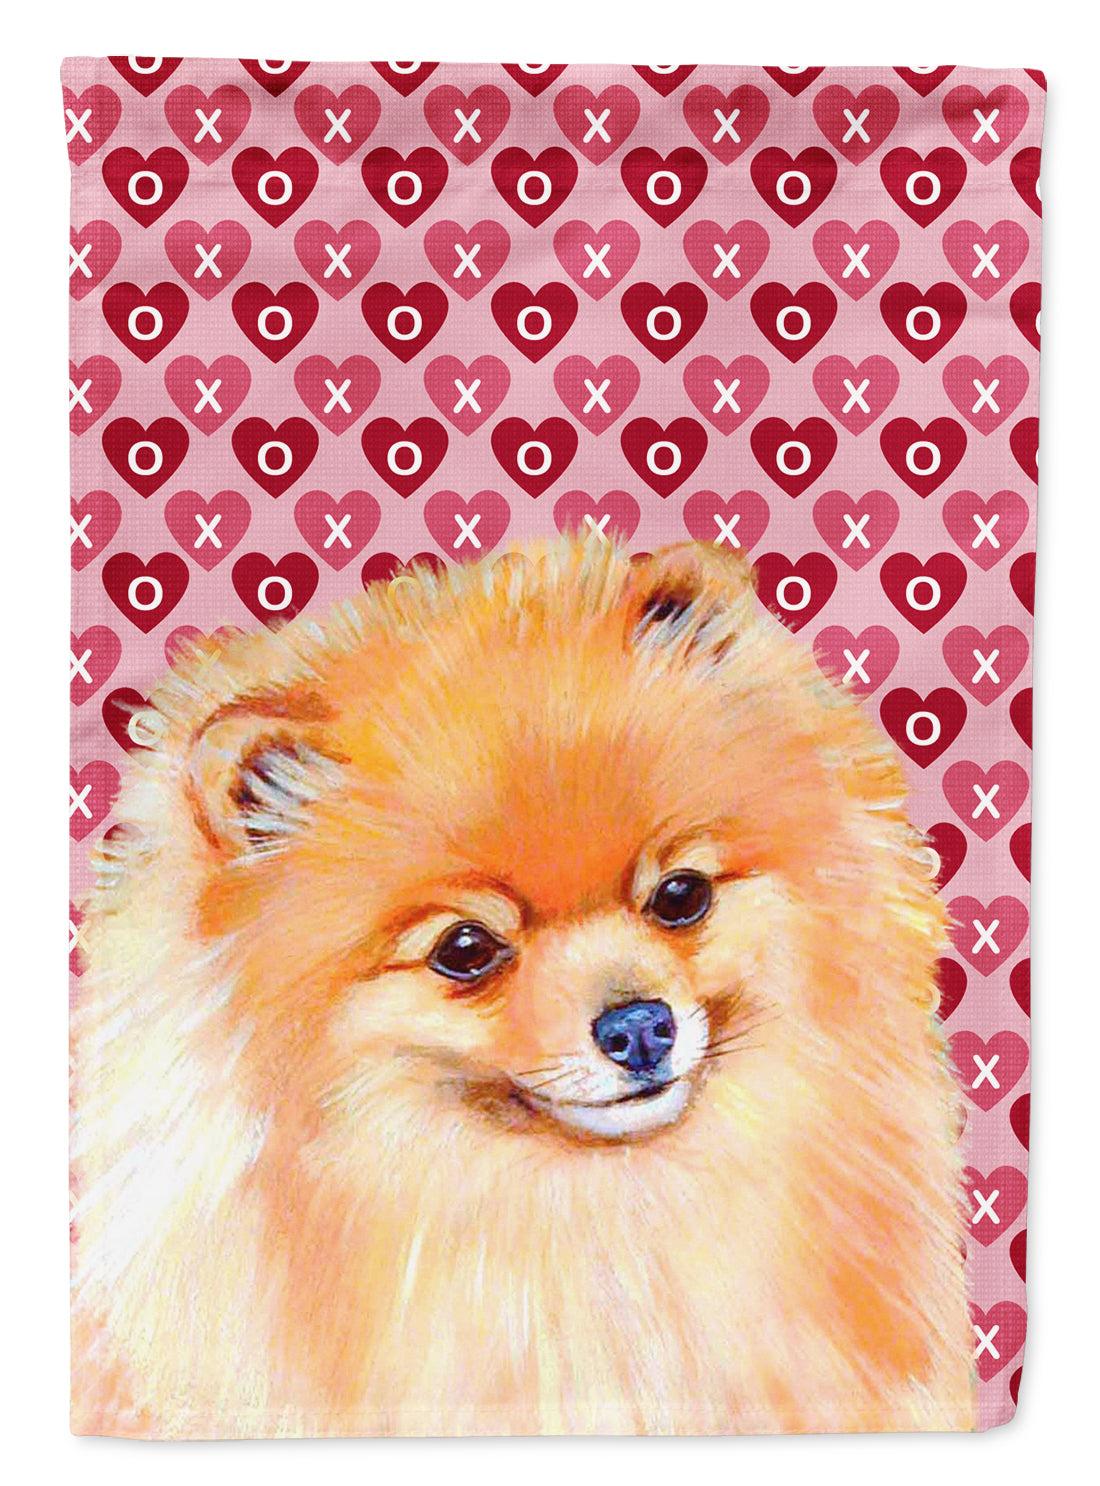 Pomeranian Hearts Love and Valentine's Day Portrait Flag Garden Size